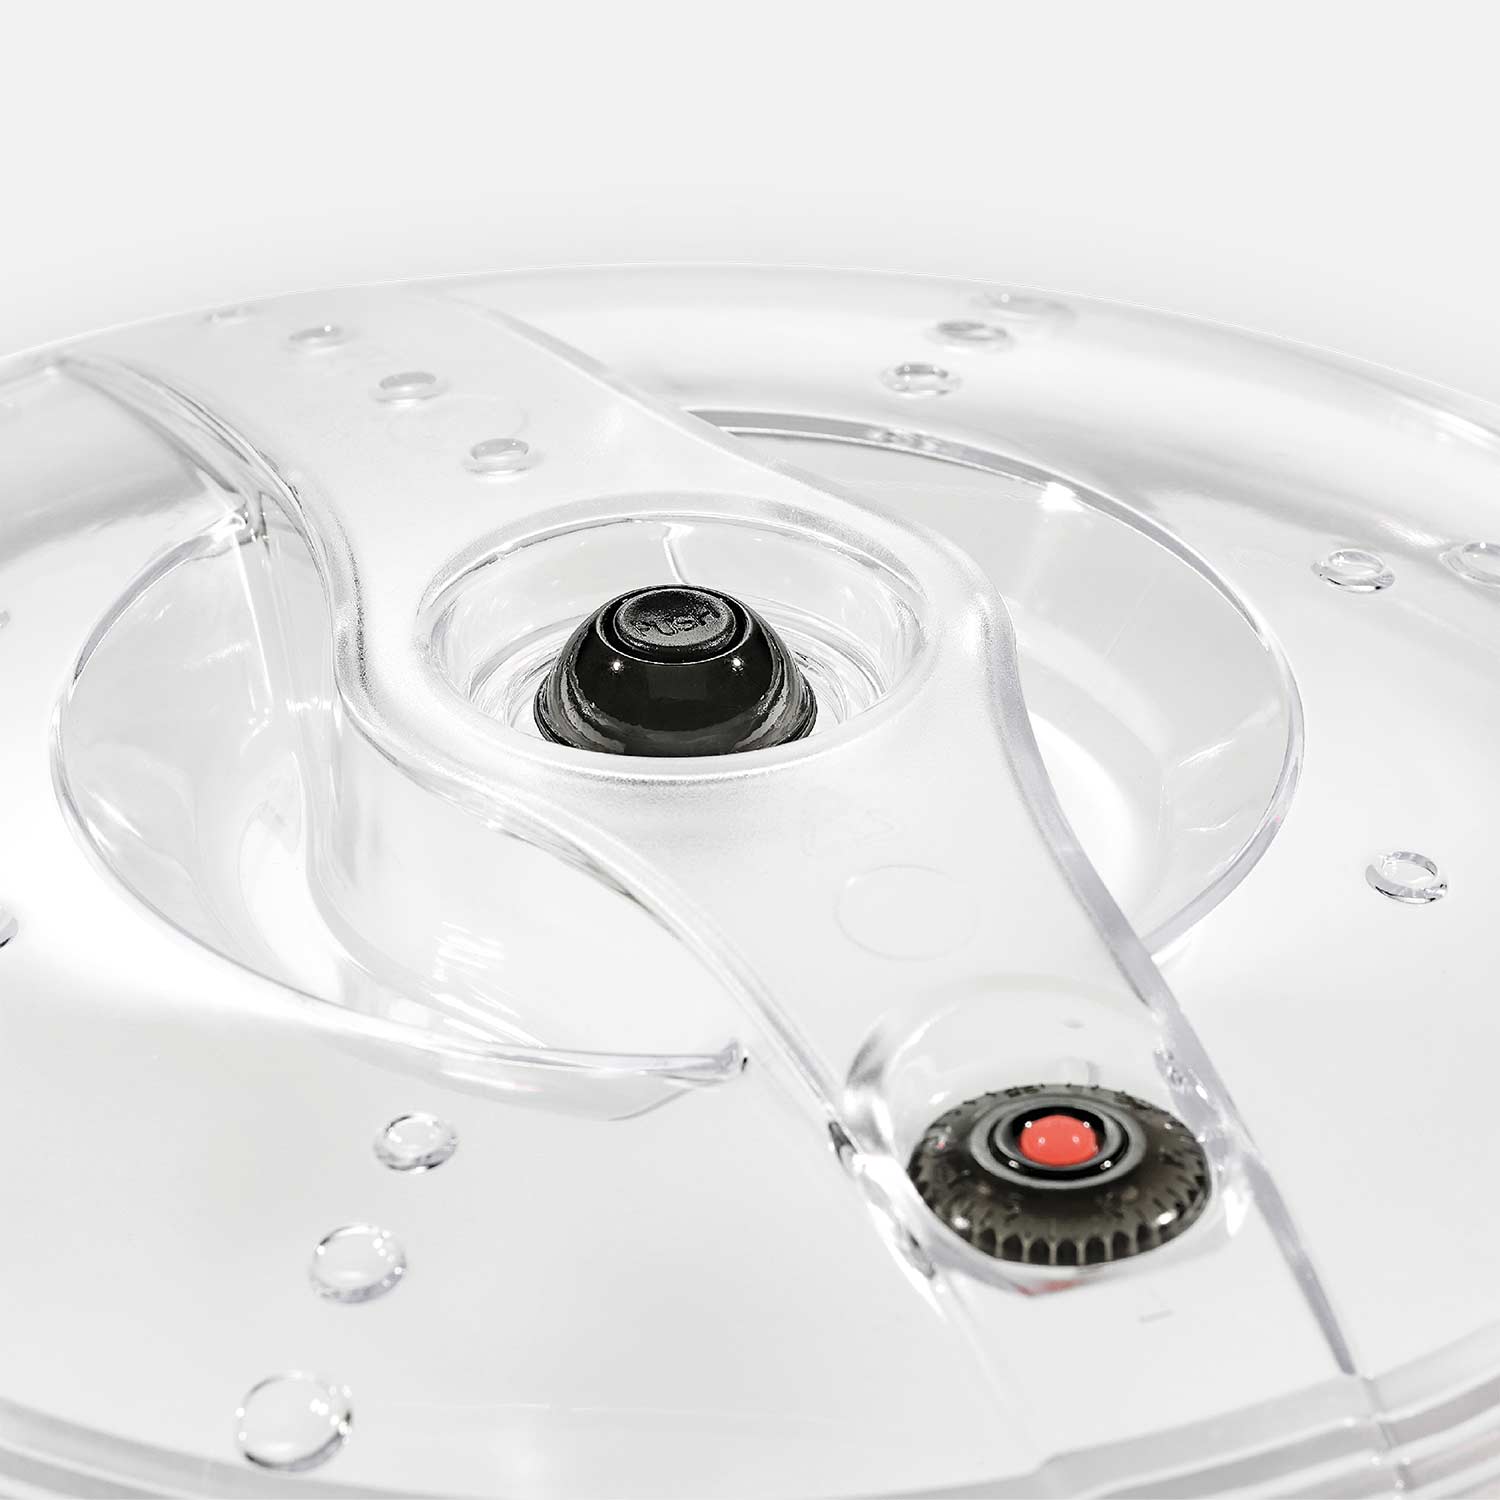 Detail of transparent universal vacuum lid with valve